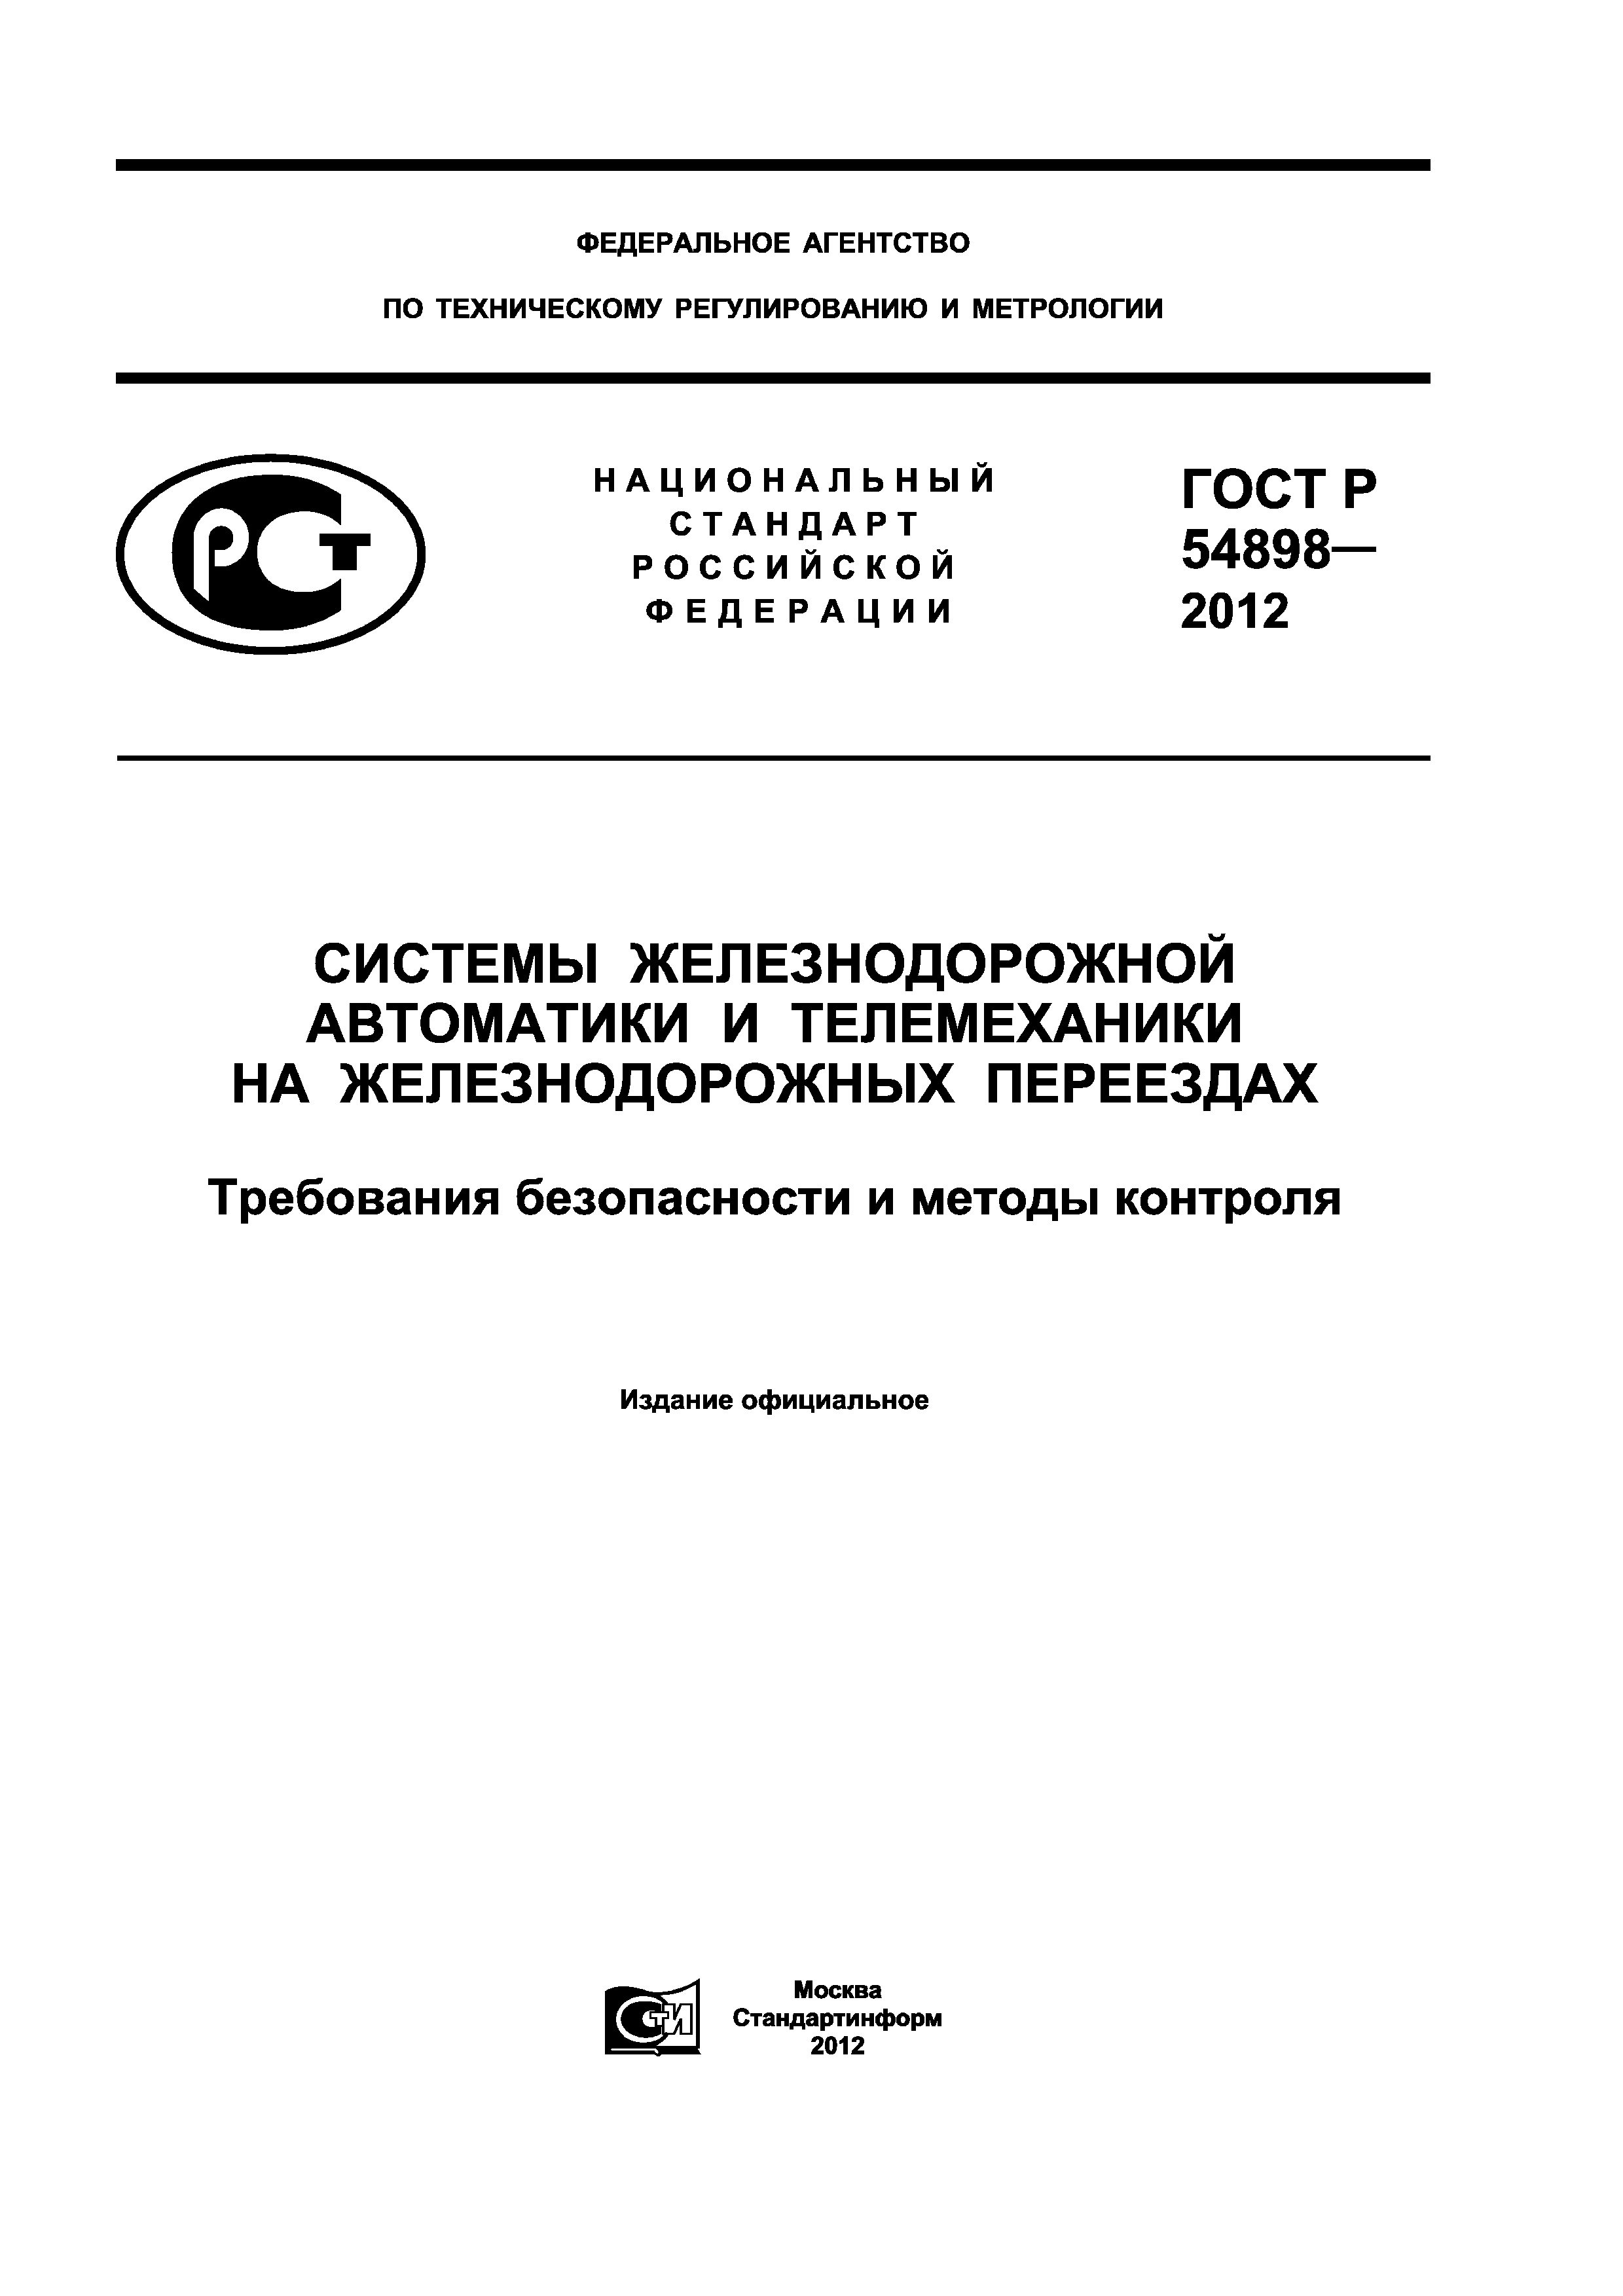 ГОСТ Р 54898-2012